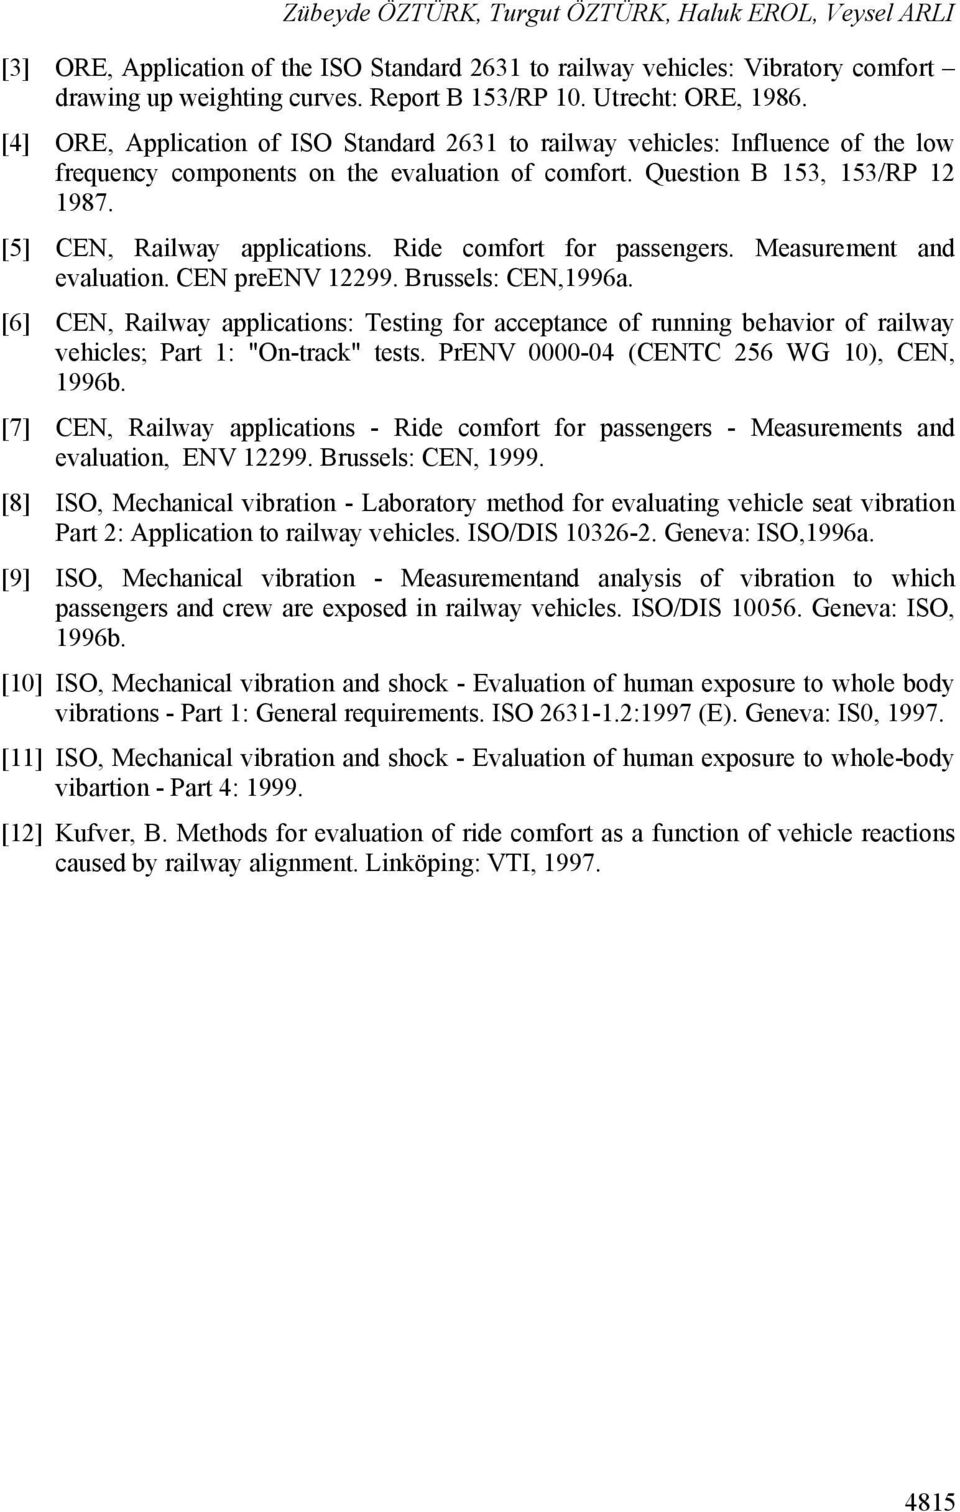 Ride comfort for pssengers. Mesurement nd evlution. CEN preenv 199. Brussels: CEN,1996. [6] CEN, Rilwy pplictions: Testing for cceptnce of running behvior of rilwy vehicles; Prt 1: "On-trck" tests.